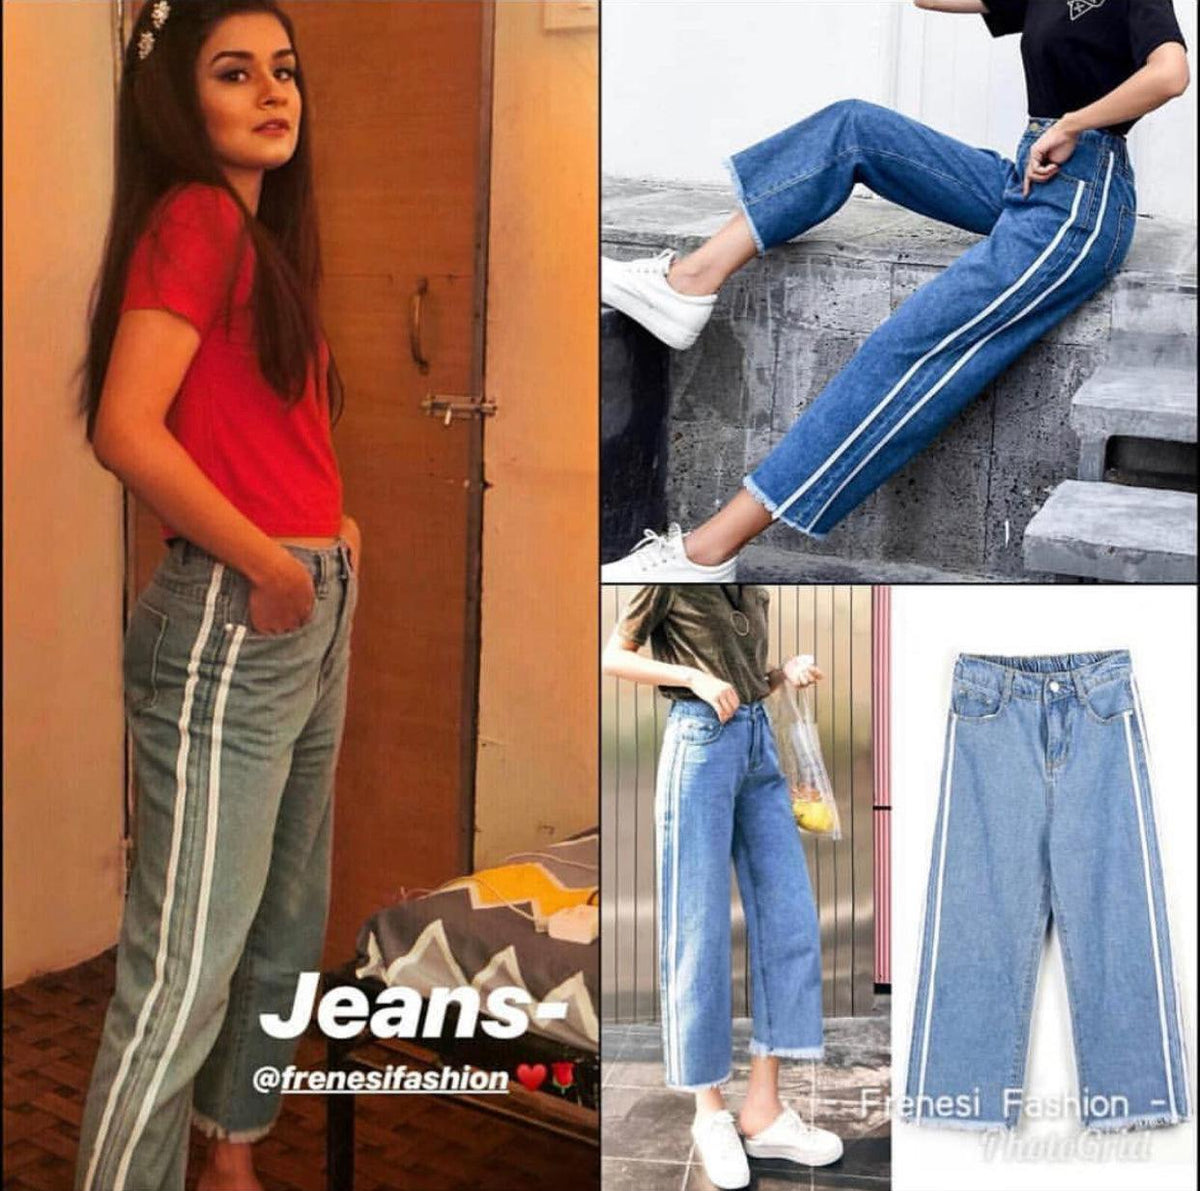 Moma Jeans - Label Frenesi Fashion